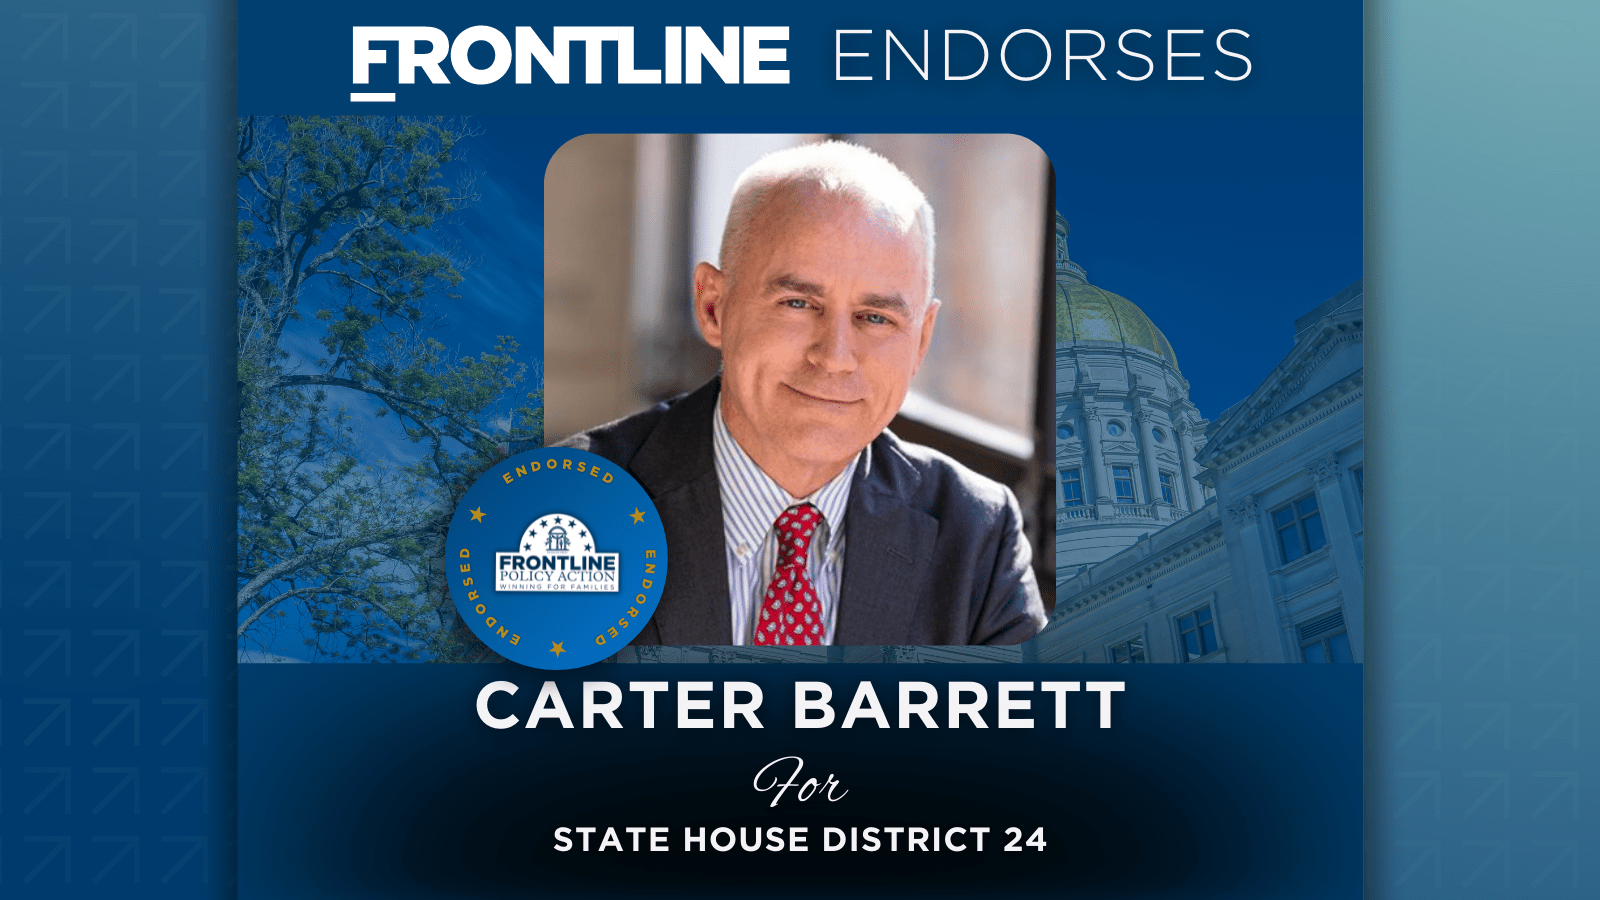 BREAKING: Frontline Endorses Carter Barrett for State House District 24